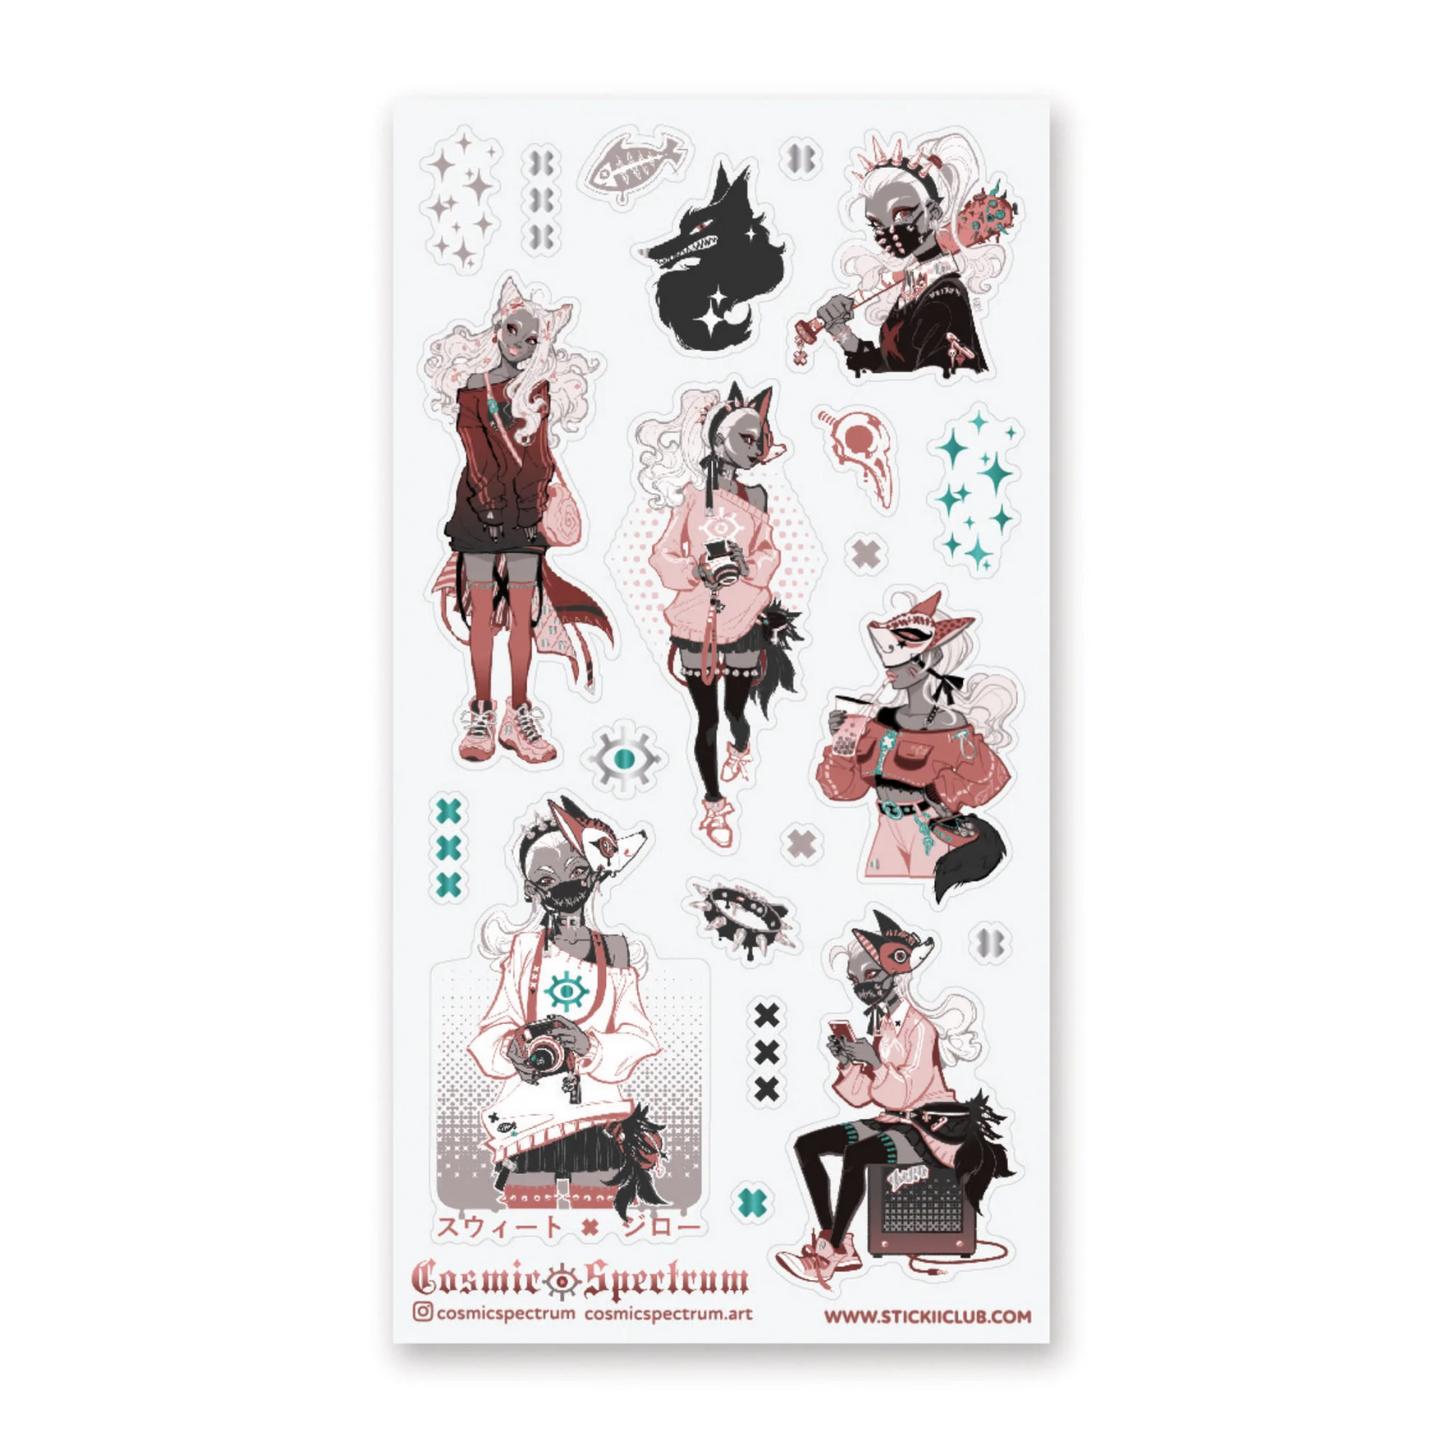 'Sweet Street Fashion' Sticker Sheet